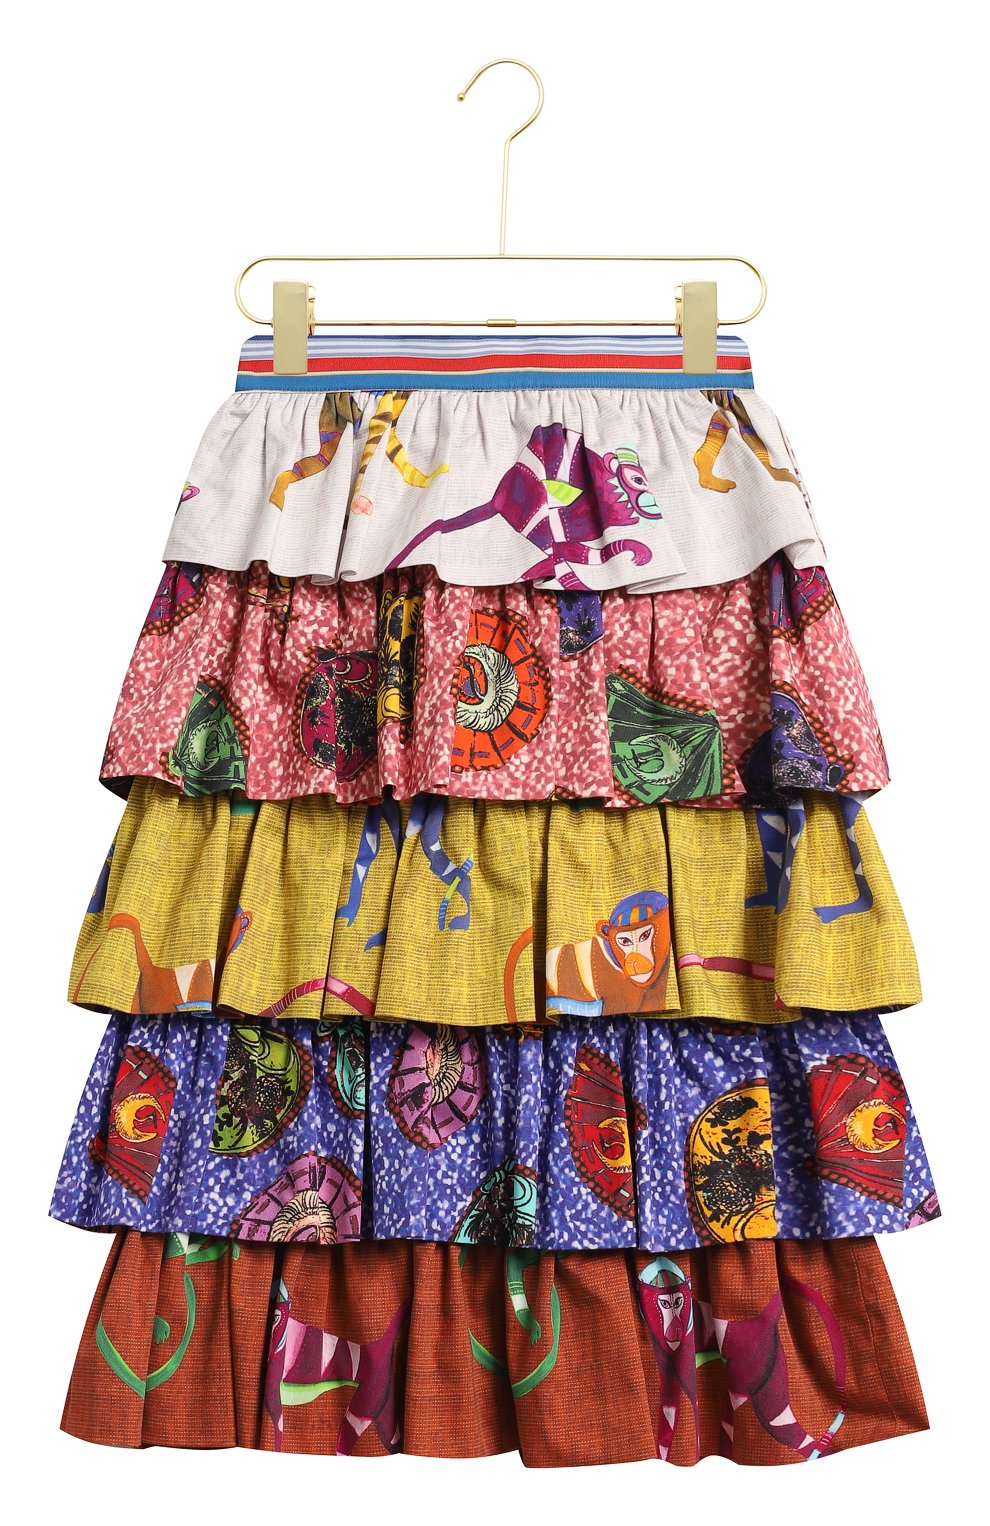 Хлопковая юбка | Stella Jean | Разноцветный - 1